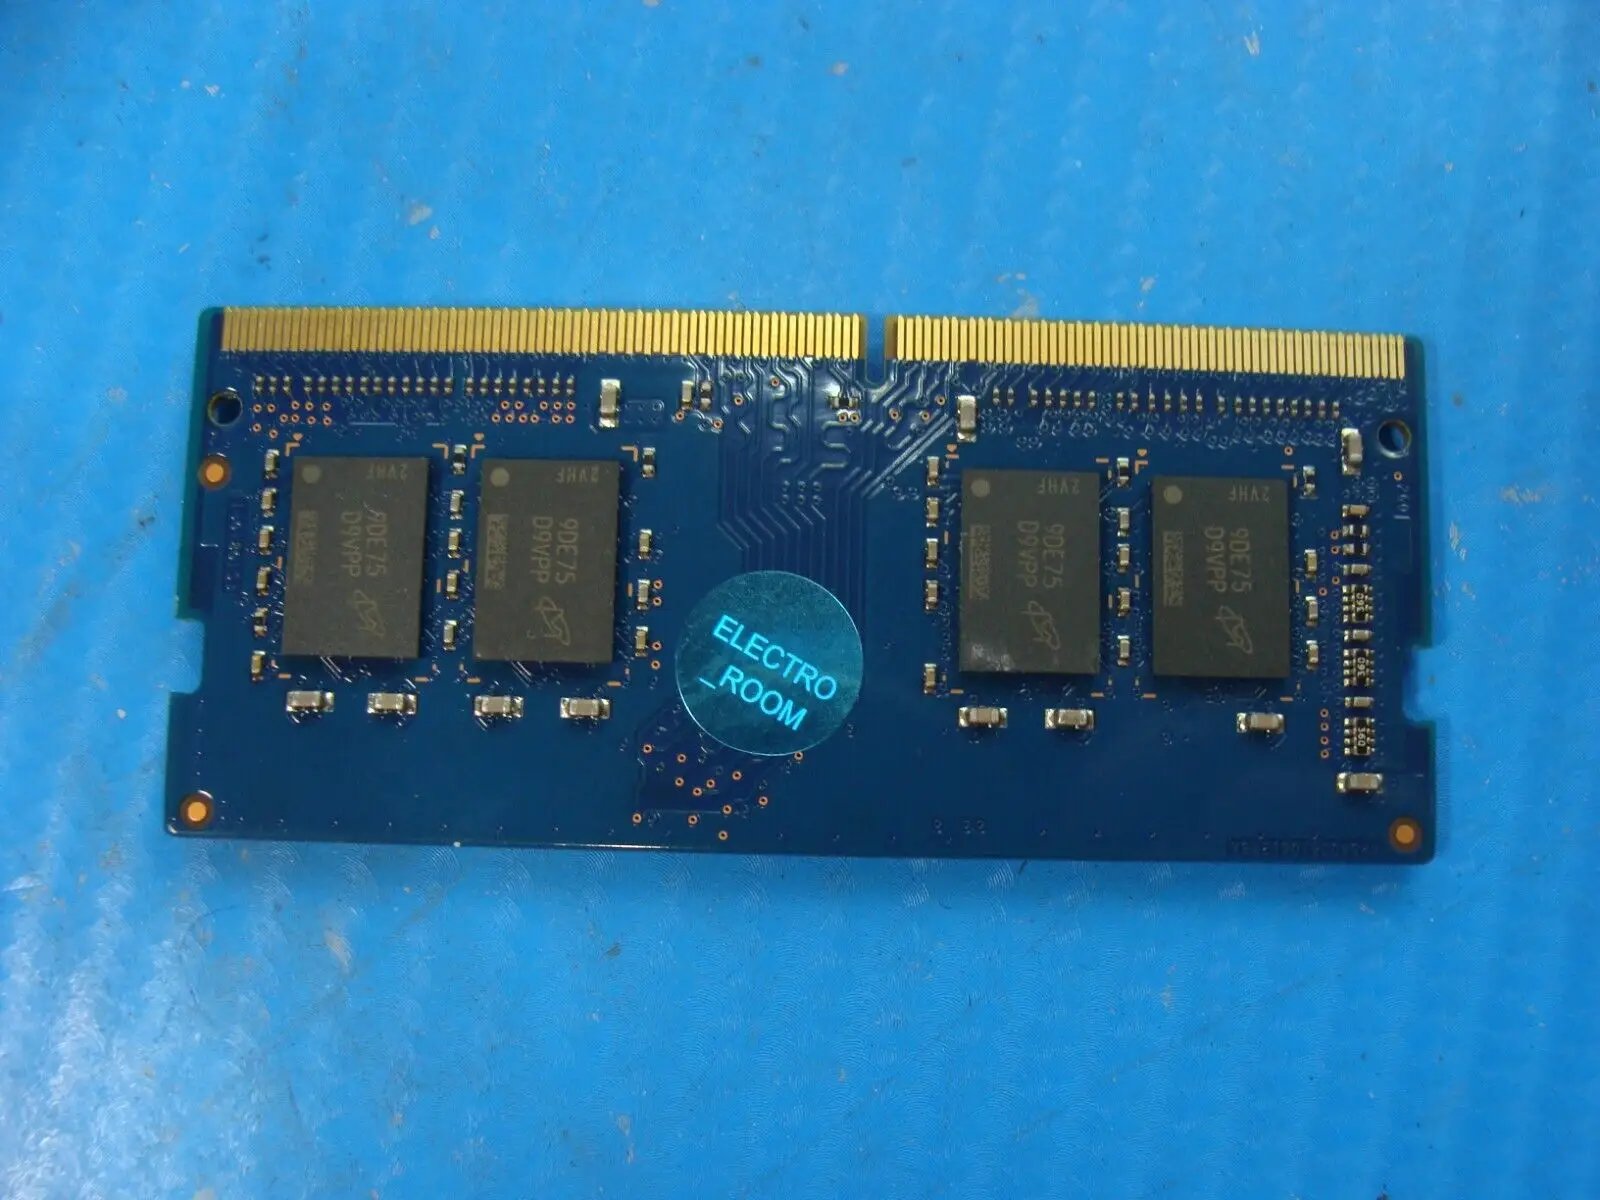 Lenovo L390 Yoga Ramaxel 8GB PC4-2666V Memory RAM SO-DIMM RMSA3260ME78HAF-2666